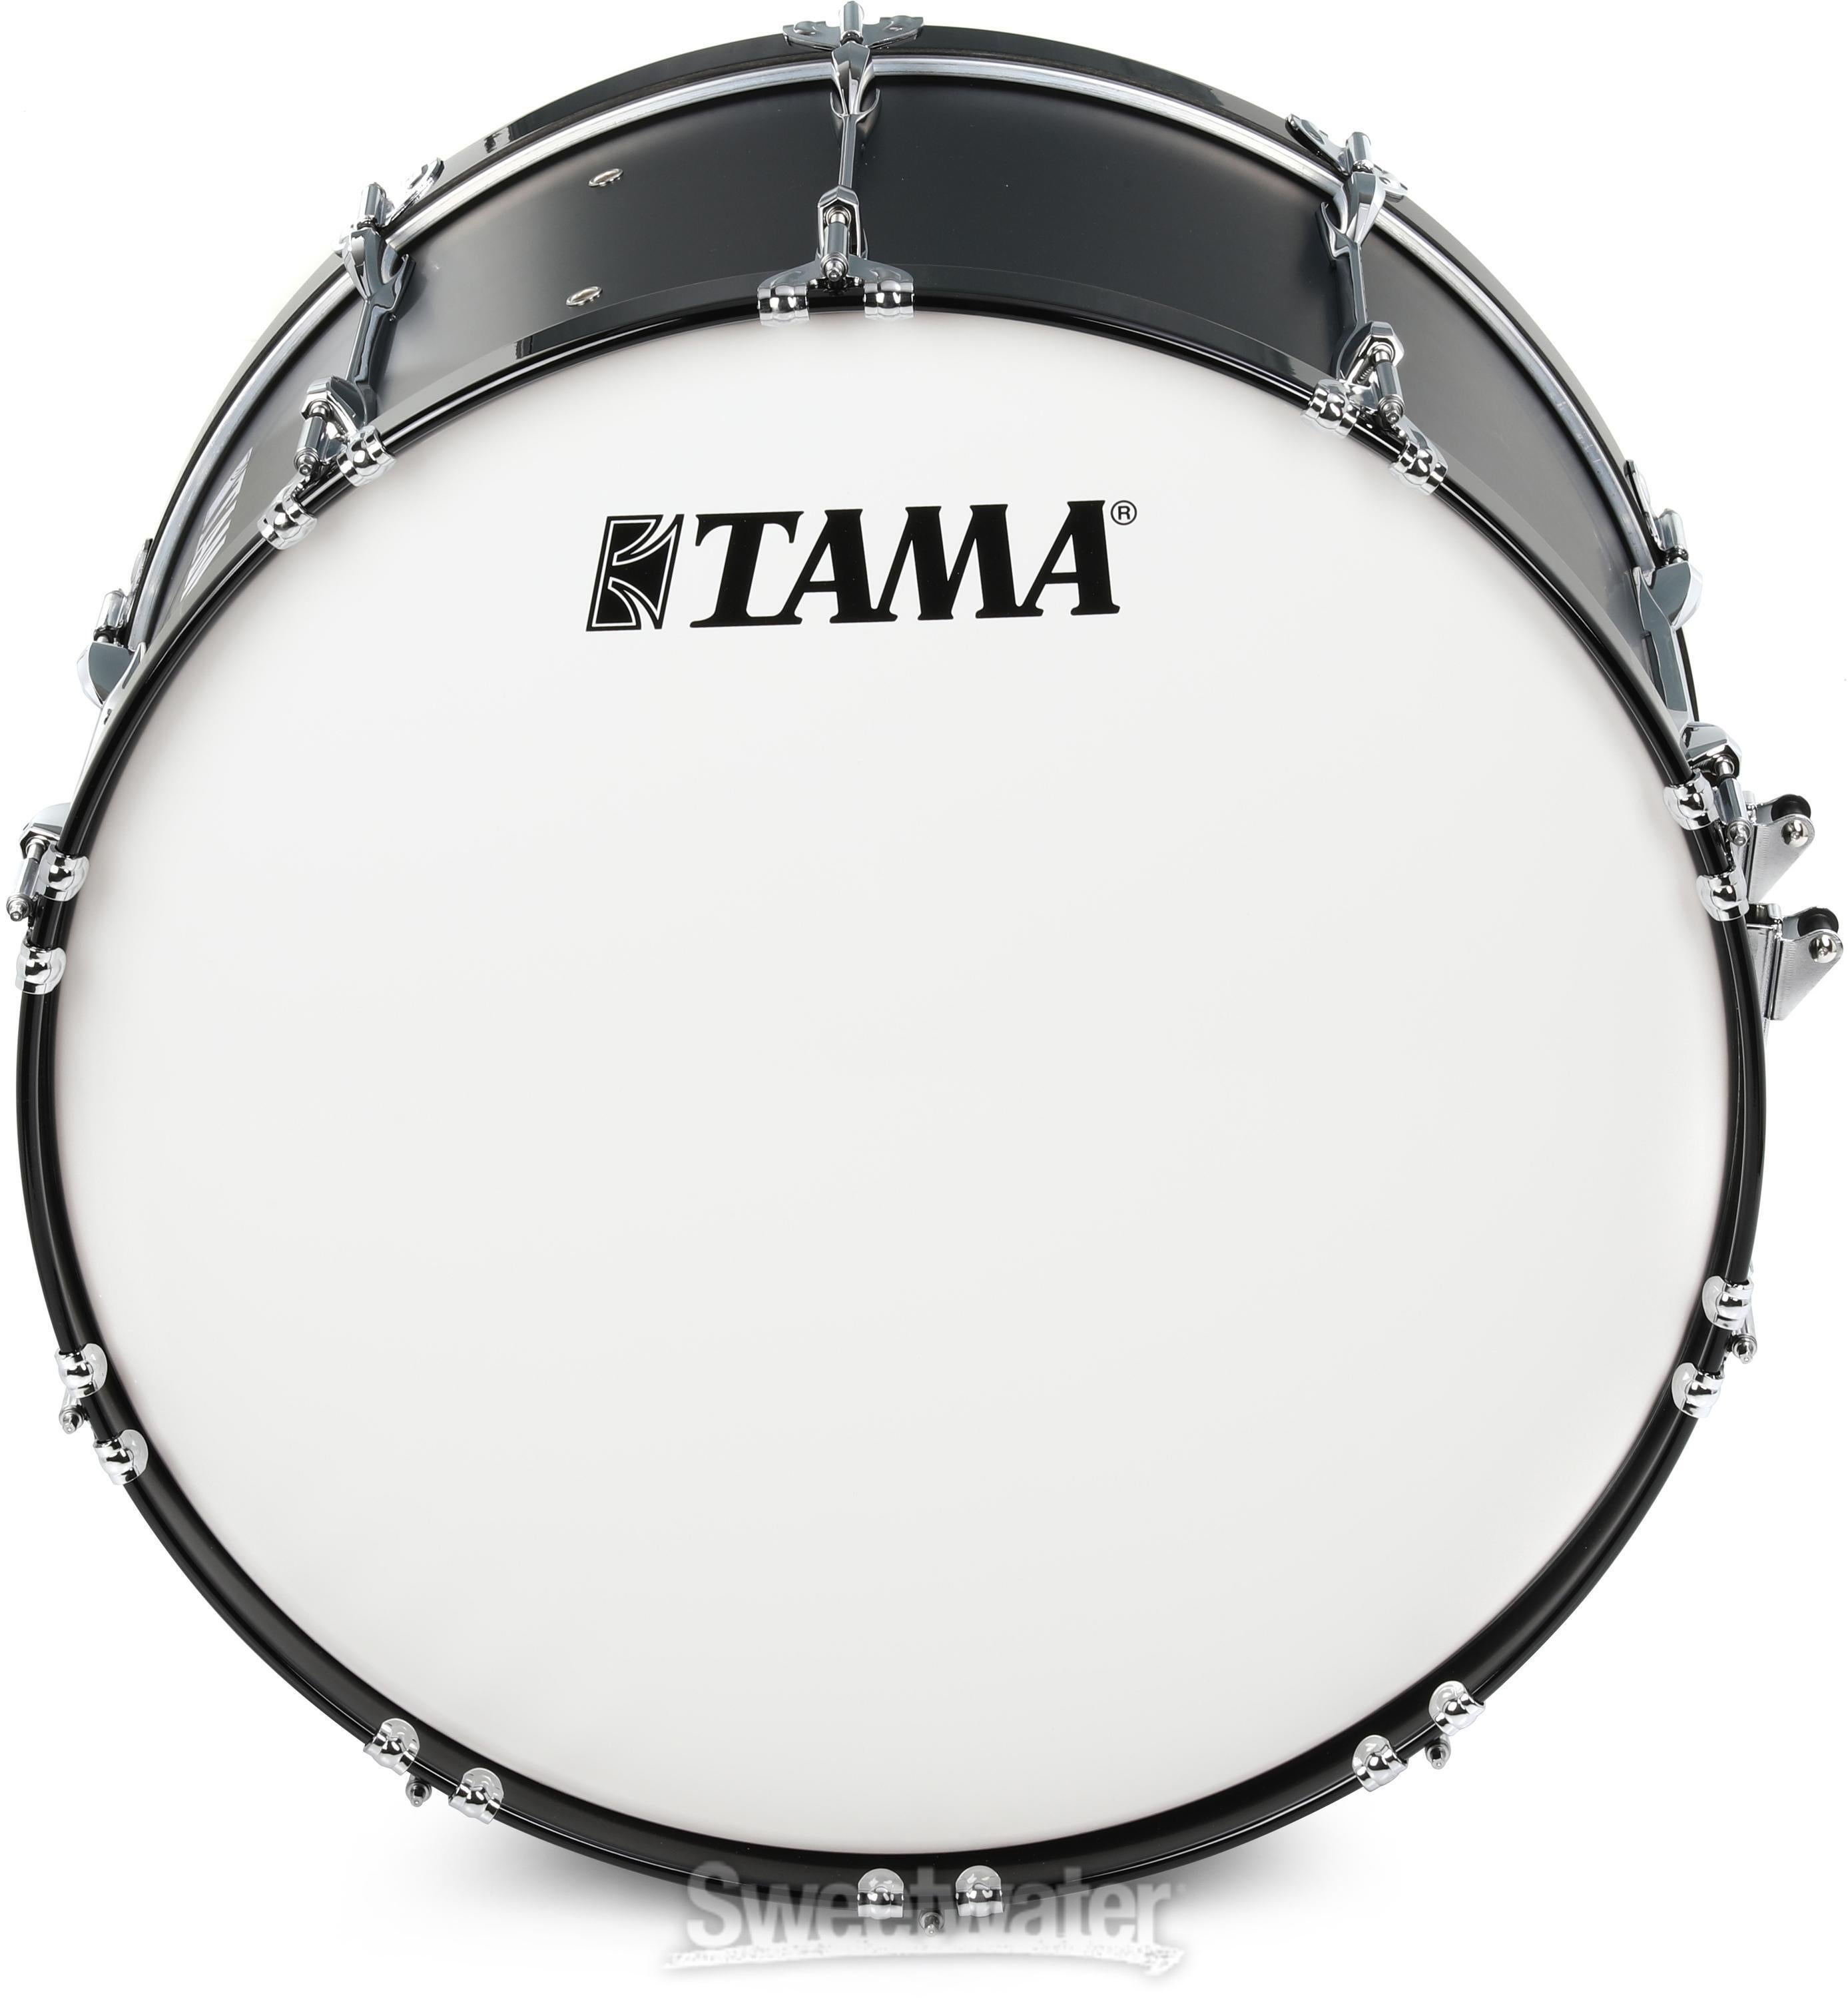 Tama Fieldstar Marching Bass Drum - 14 x 28 inch - Satin Black 